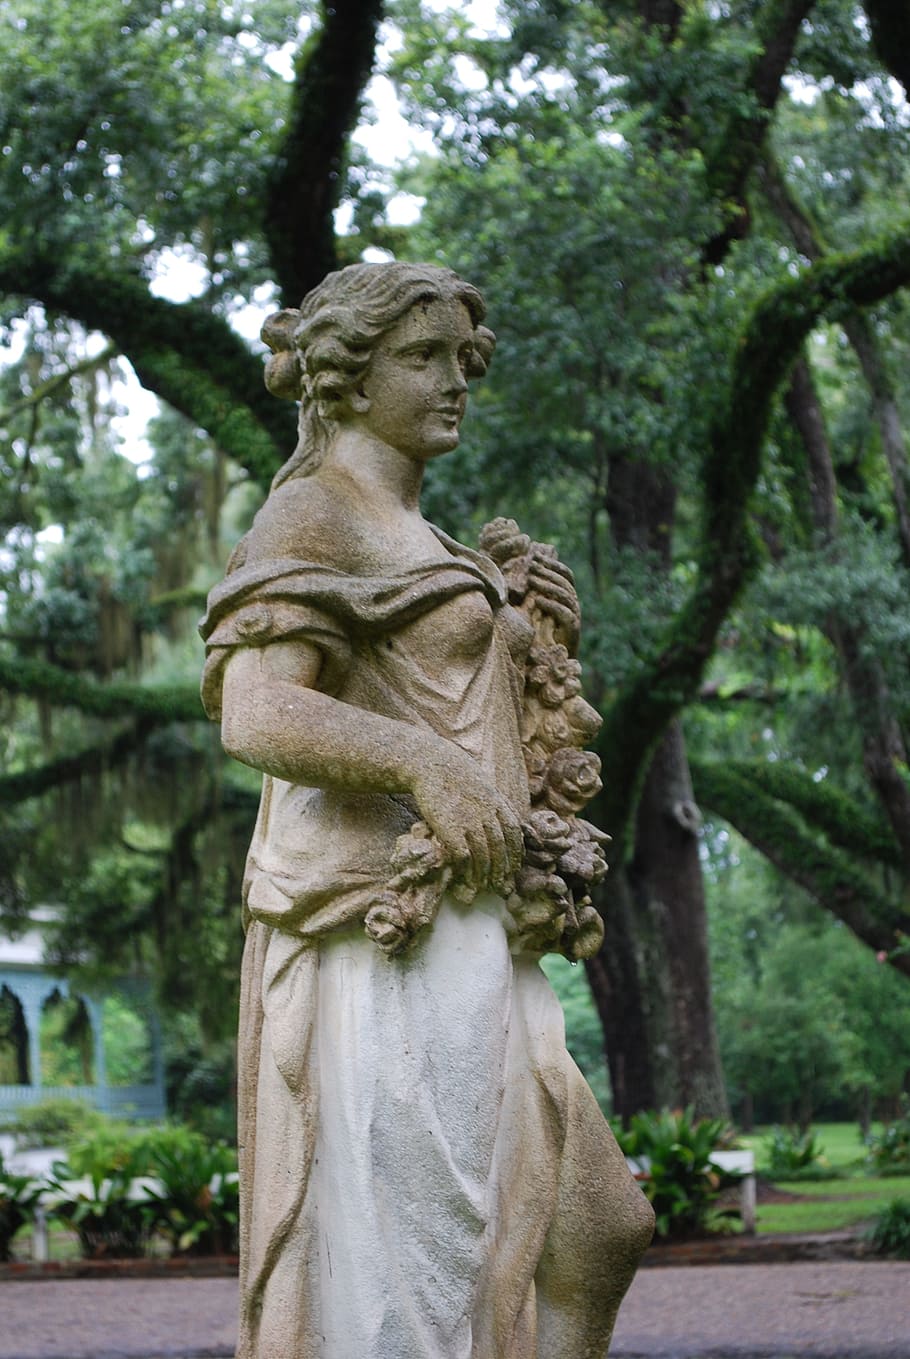 Statue, Sculpture, Female, lady, mona lisa, myrtles plantation, louisiana, tree, cemetery, sadness